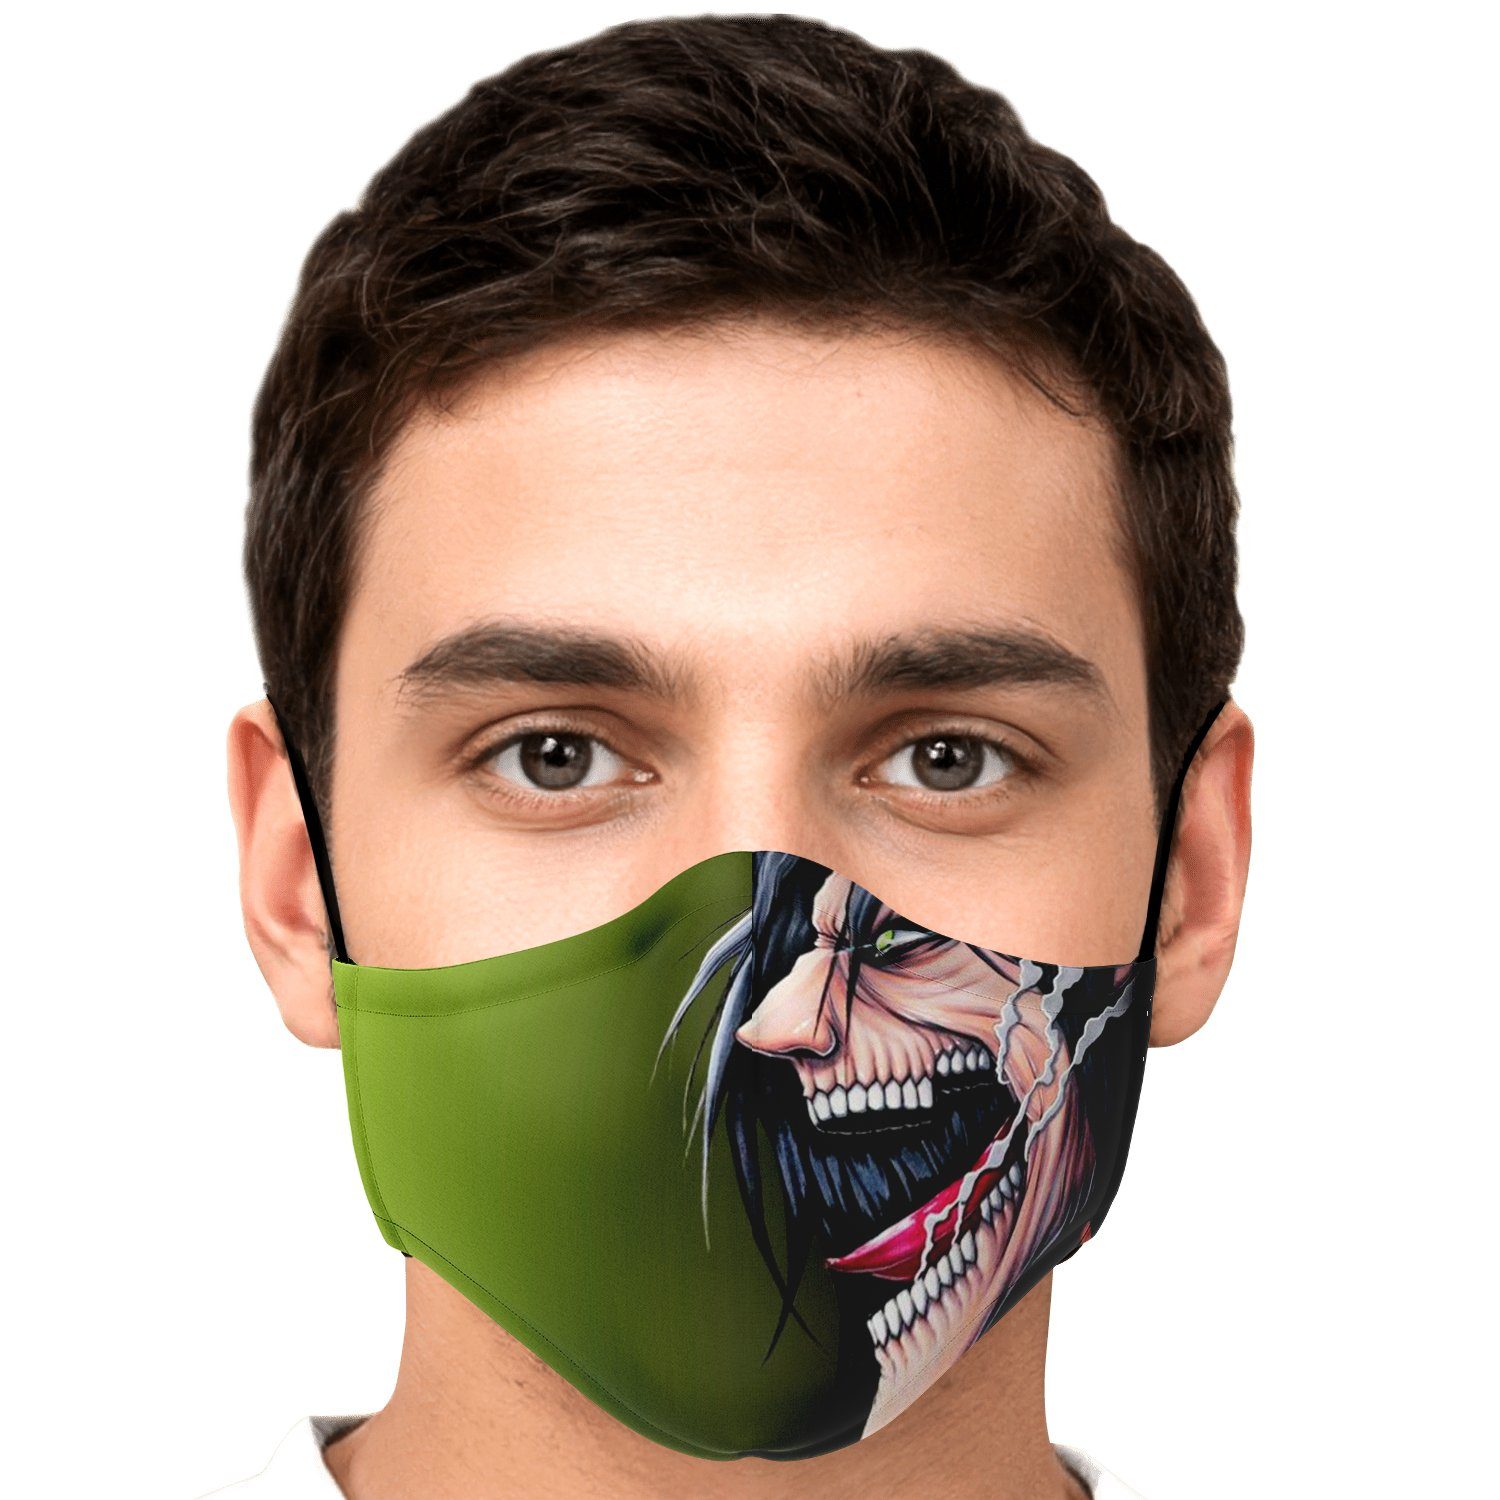 jaw titan v4 attack on titan premium carbon filter face mask 756501 - Attack On Titan Shop